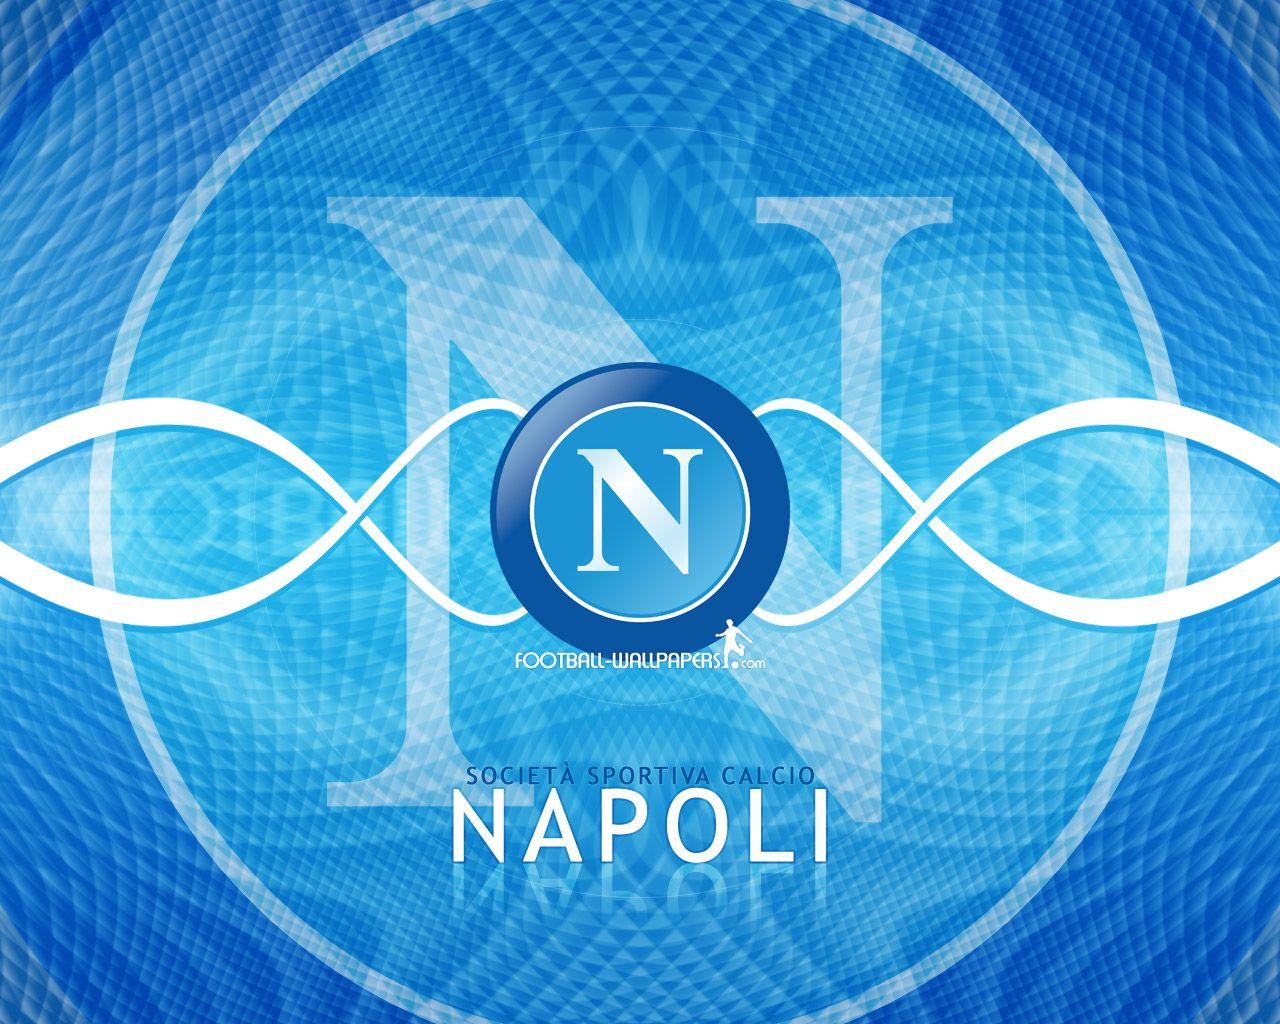 1280x1024px Napoli Calcio background and image 5